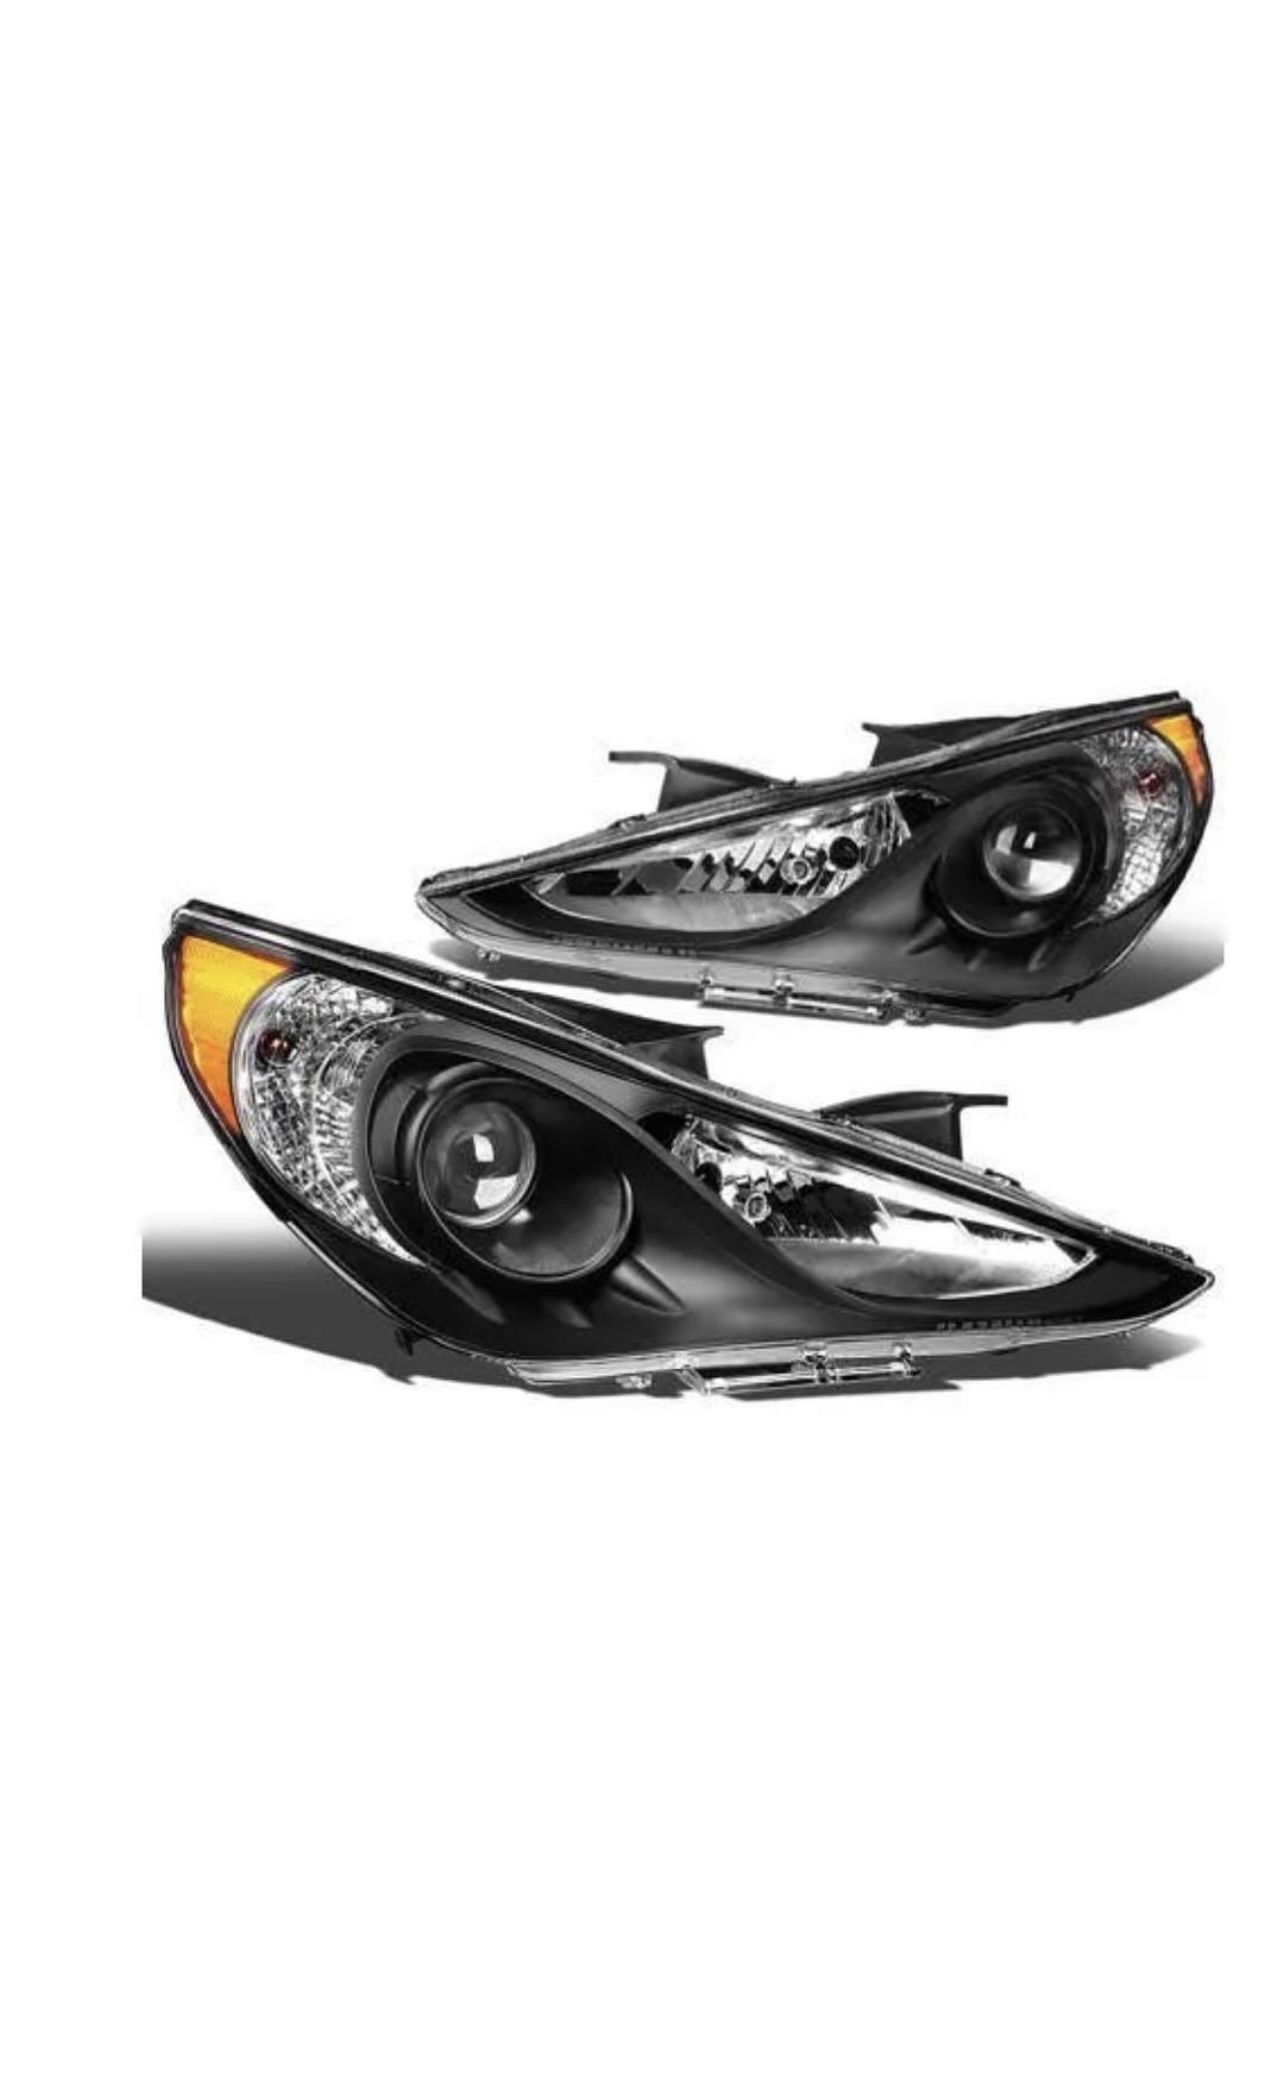 11-14 Hyundai Sonata Black Housing / Clear / Amber Projector Replacement Pair Headlights Calaveras De Enfrente 